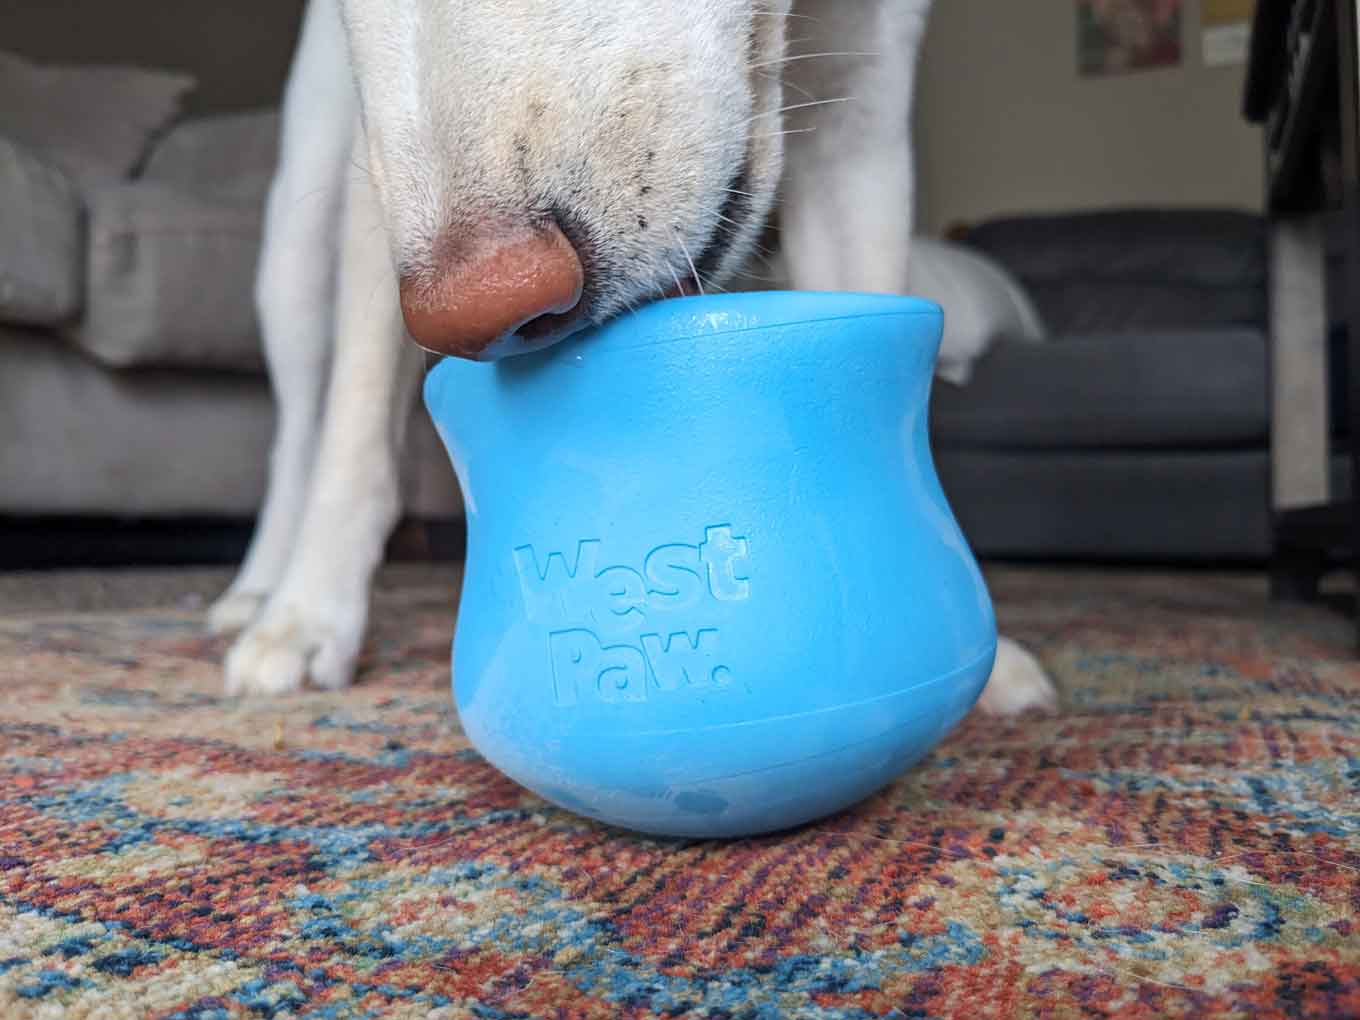 A brown dog nose sniffs a blue toy